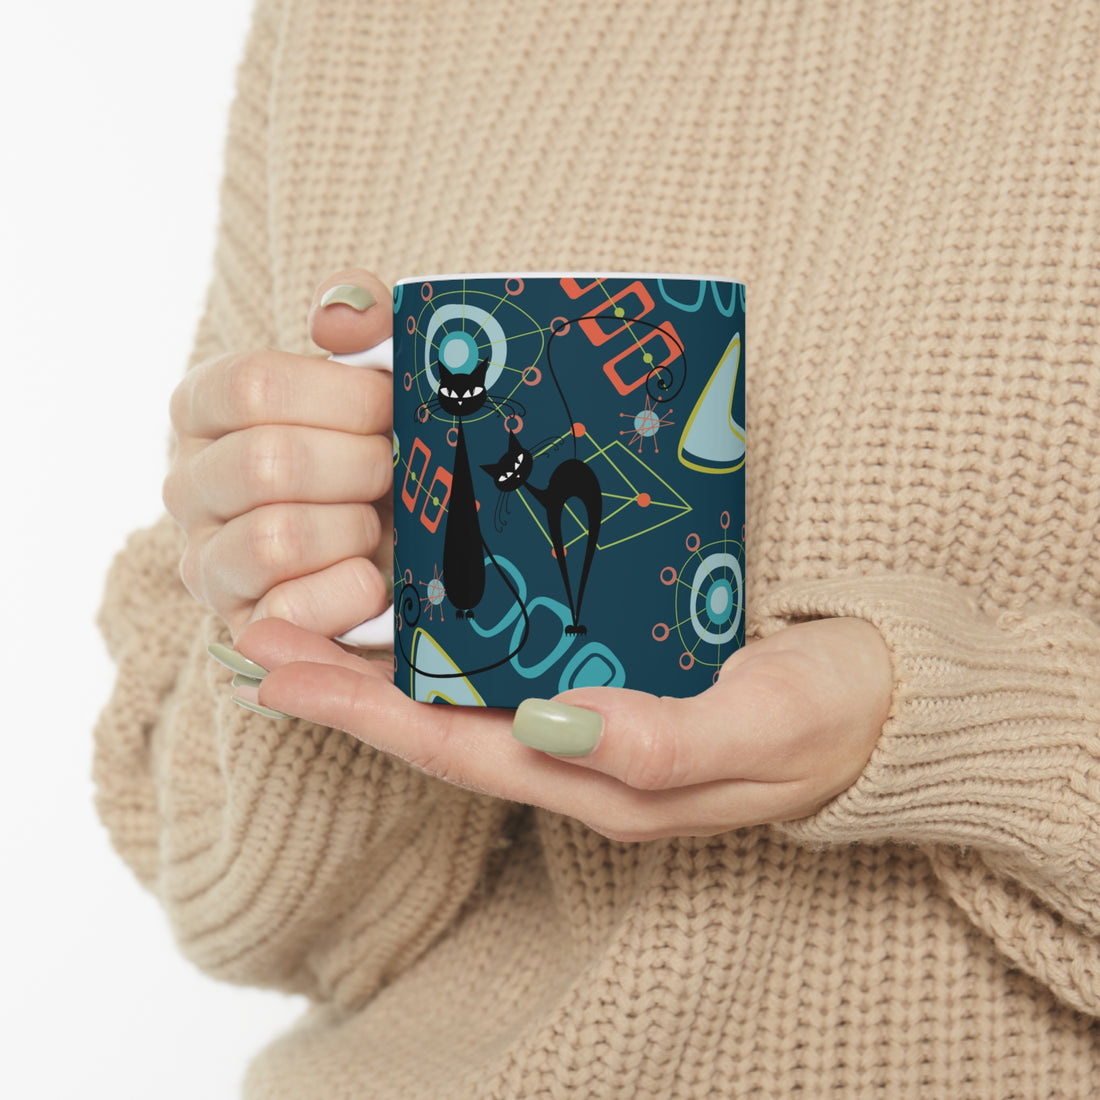 Atomic Cat Ceramic Mug, Space Age, Sputnik Designs Mid Century Modern, Blue, Aqua, Boomerangs, Coffee, Tea Drinkware